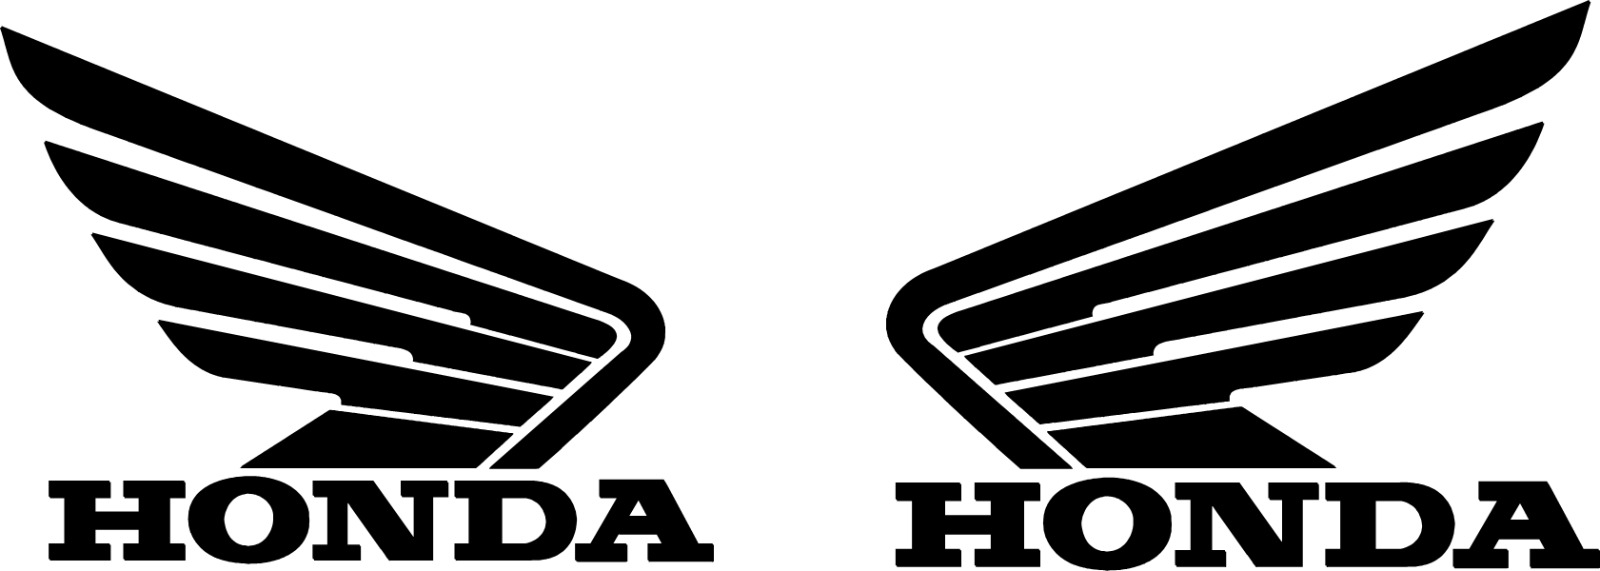 Set of 2 Honda Wing Vinyl Decal/Sticker: Cars, ATVs, MX Boats, Truck, Racing